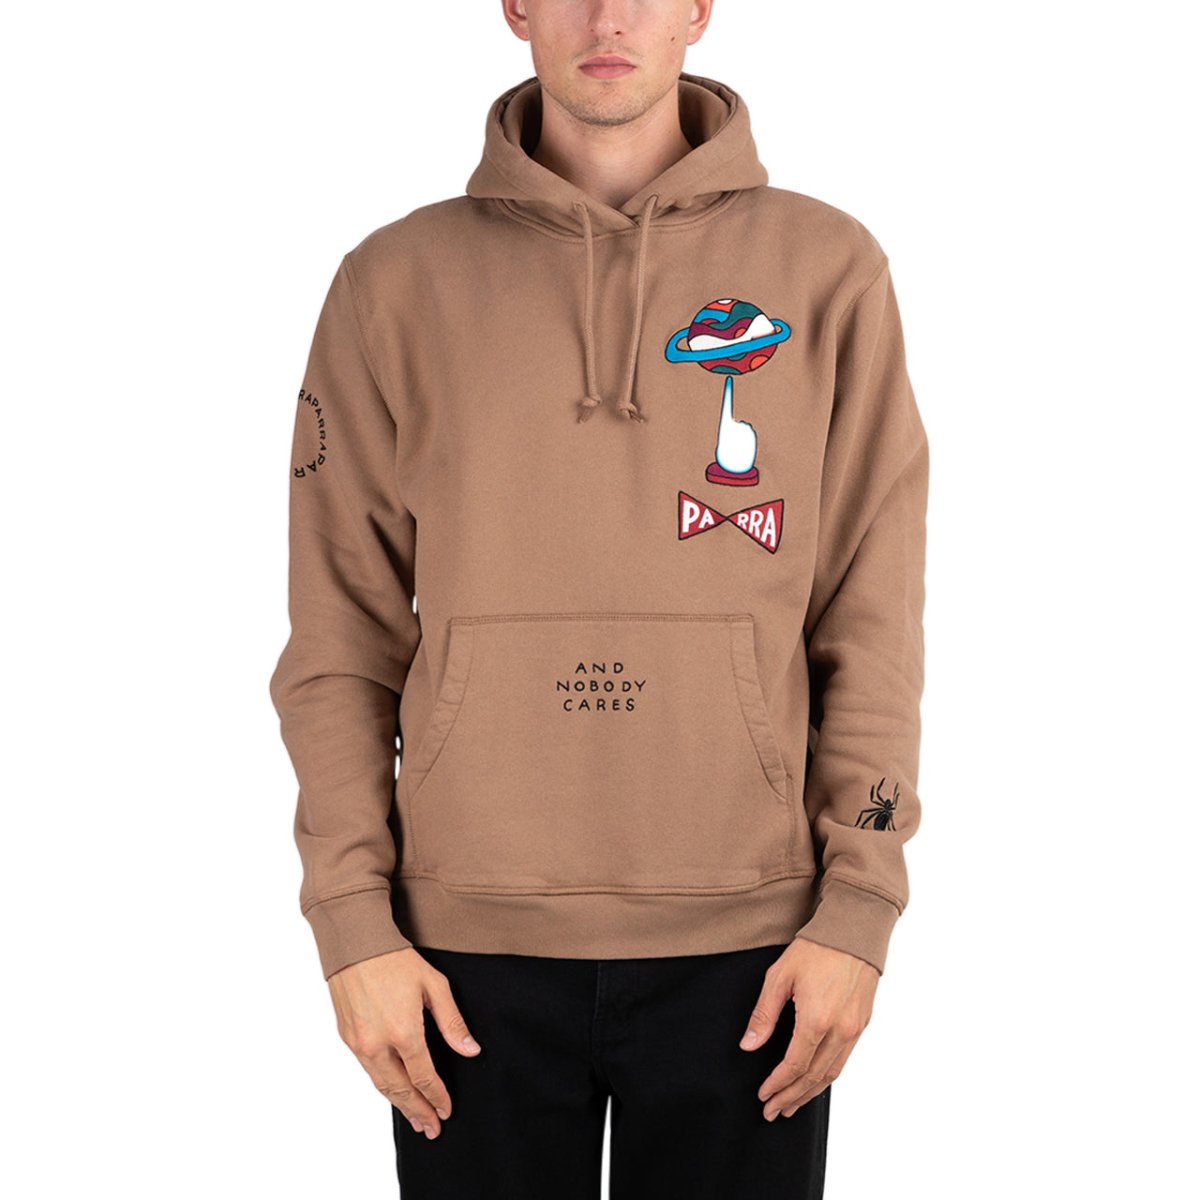 Image of Parra World Balance Hooded Sweatshirt (Brown)